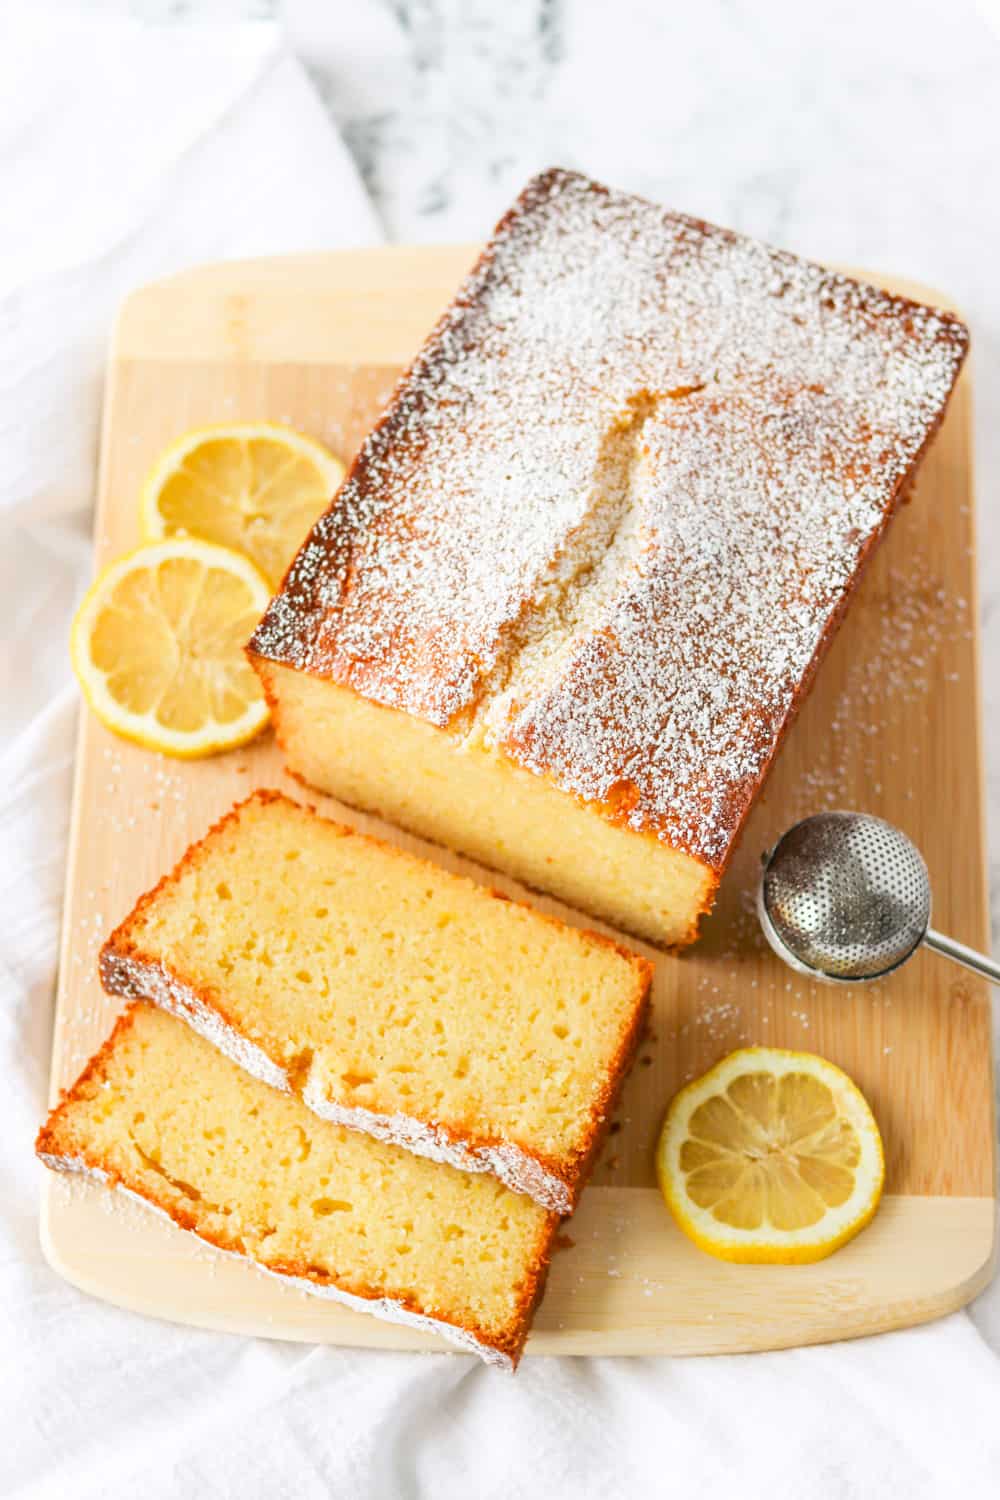 https://www.365daysofbakingandmore.com/wp-content/uploads/2014/03/Lemon-Ricotta-Pound-Cake-PIN2.jpg